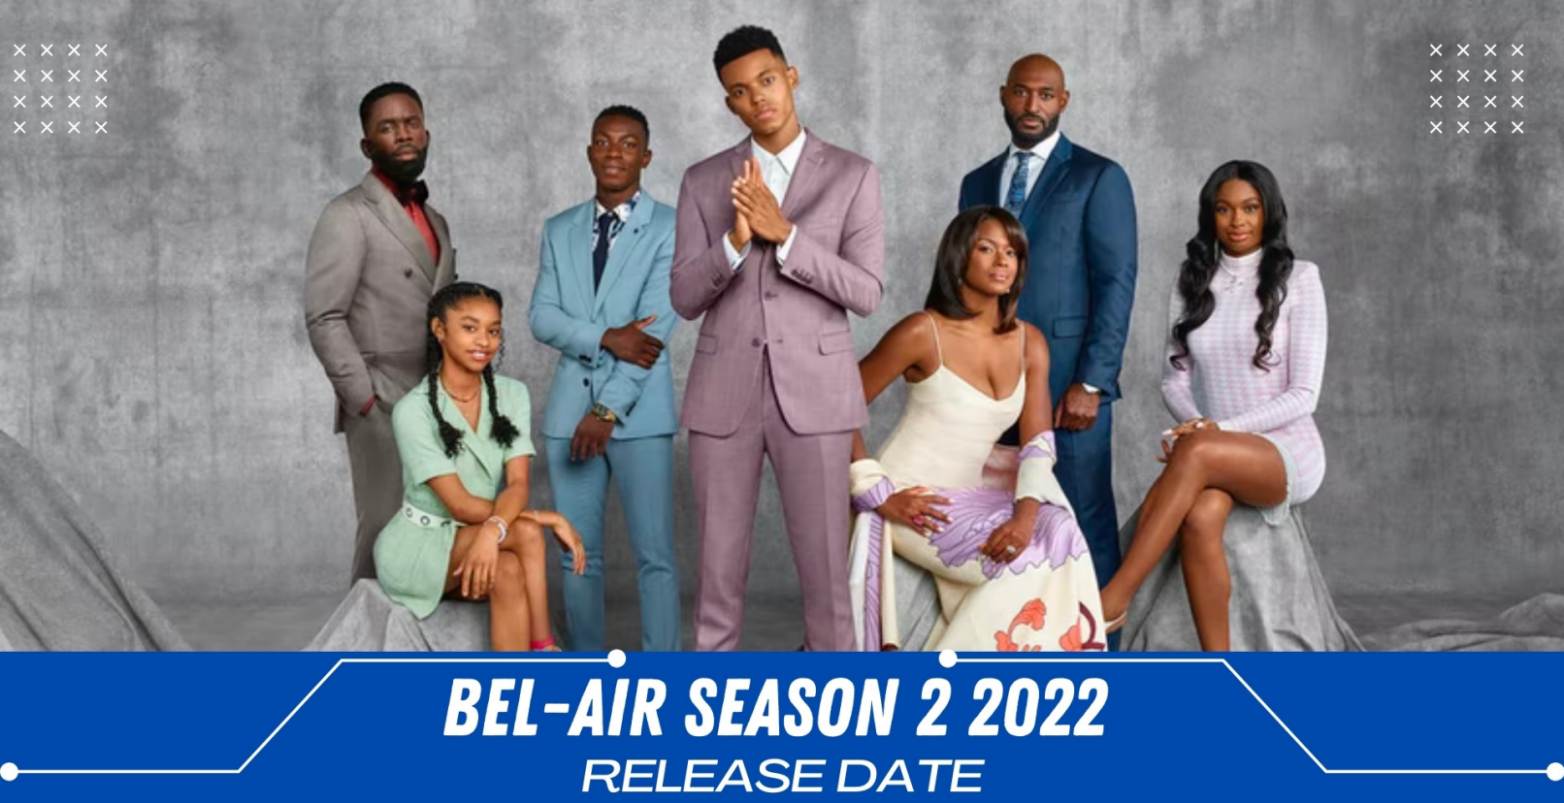 Bel-air Season 2 2022 Release Date